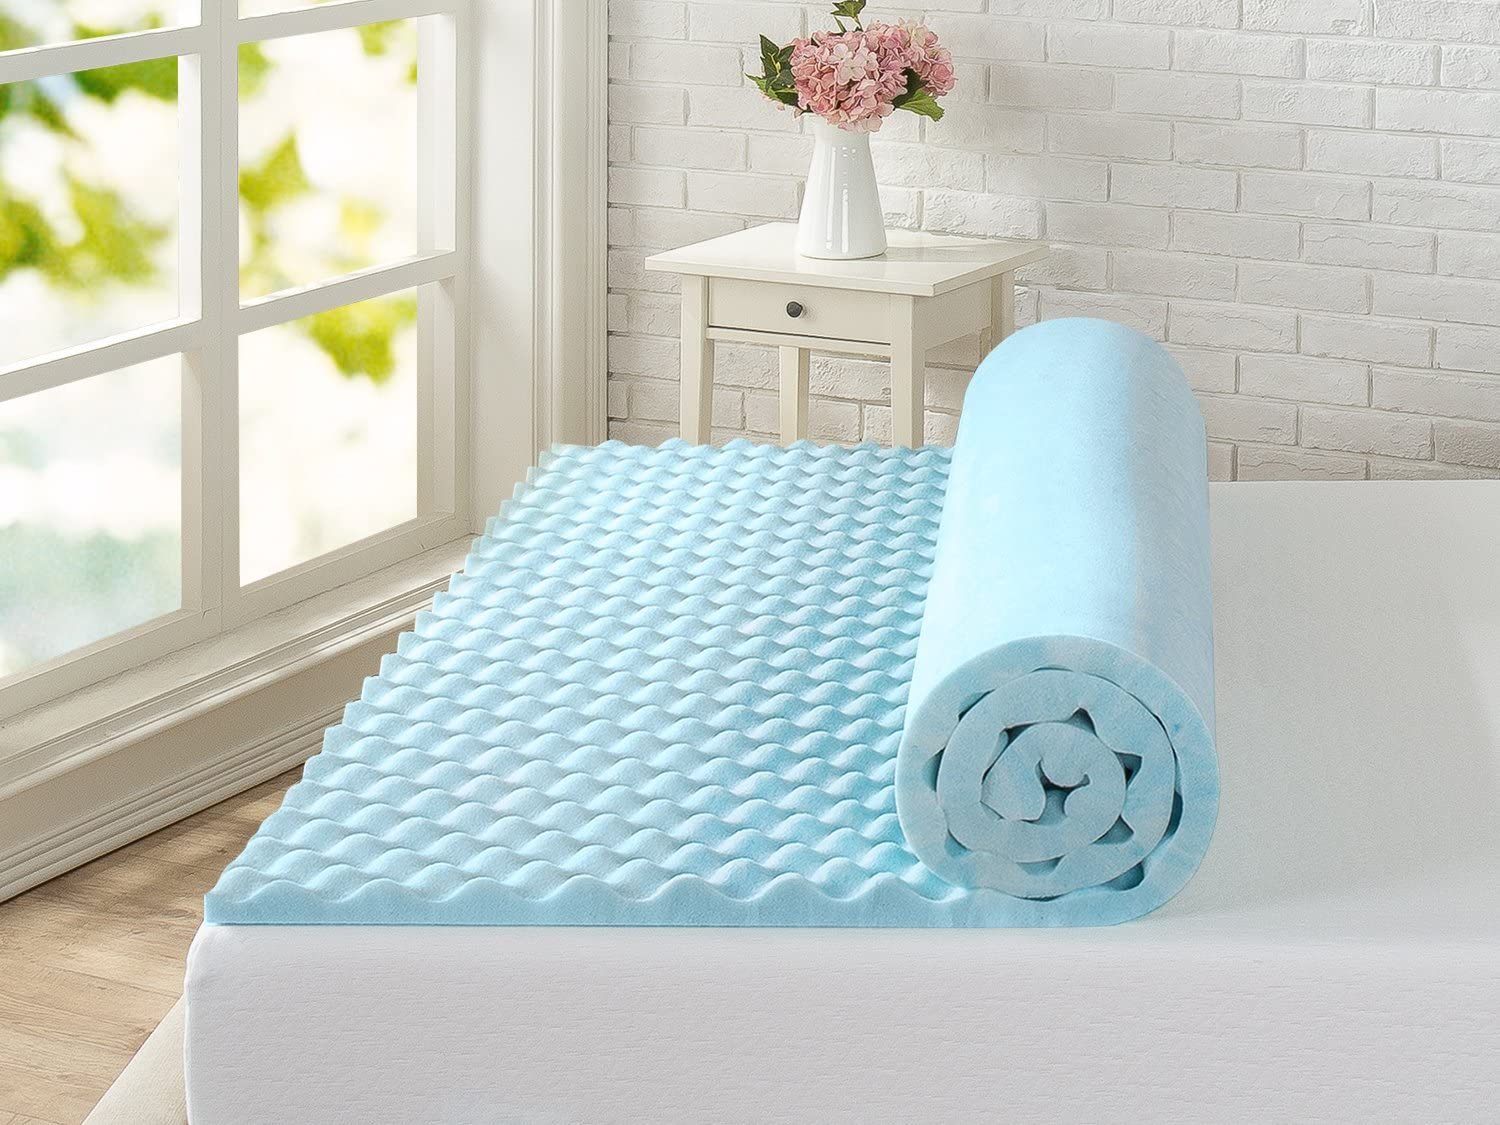 convoluted polyurethane foam mattress topper